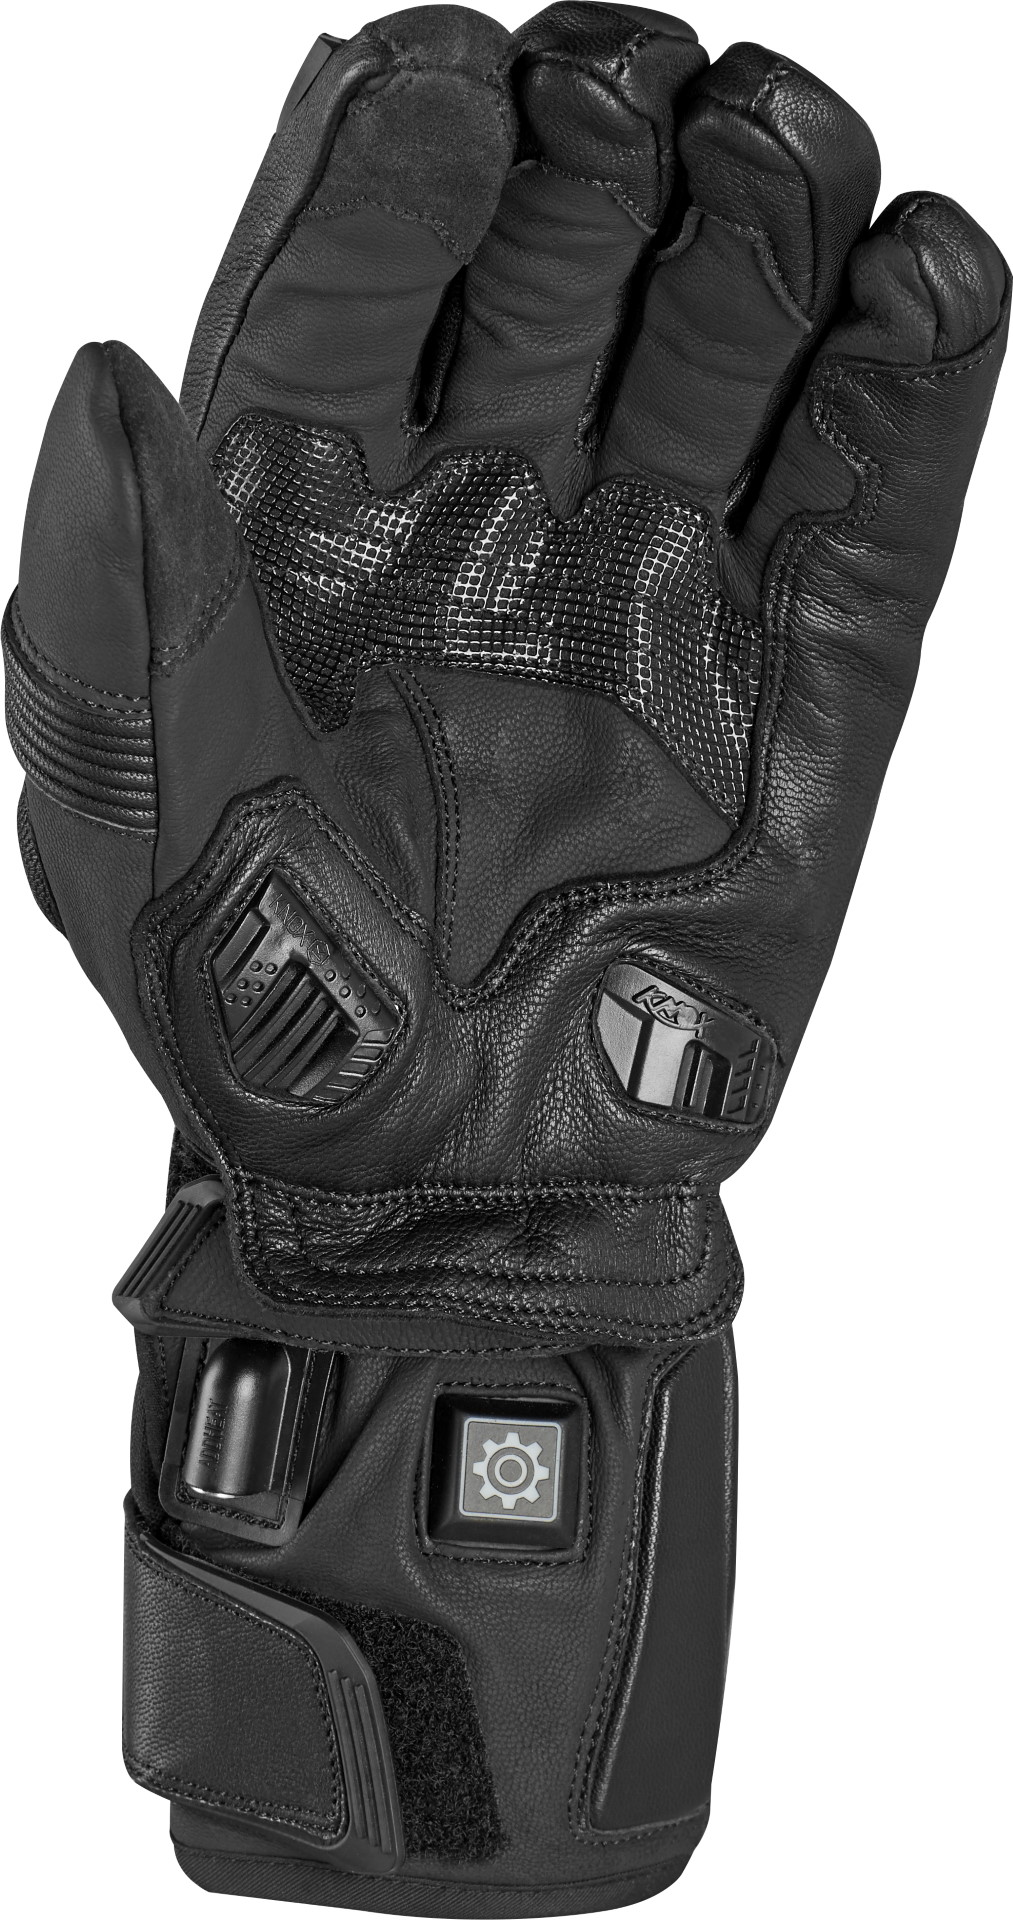 Heated Outrider Glove - Women's | Gloves | Premium Motorcycle 